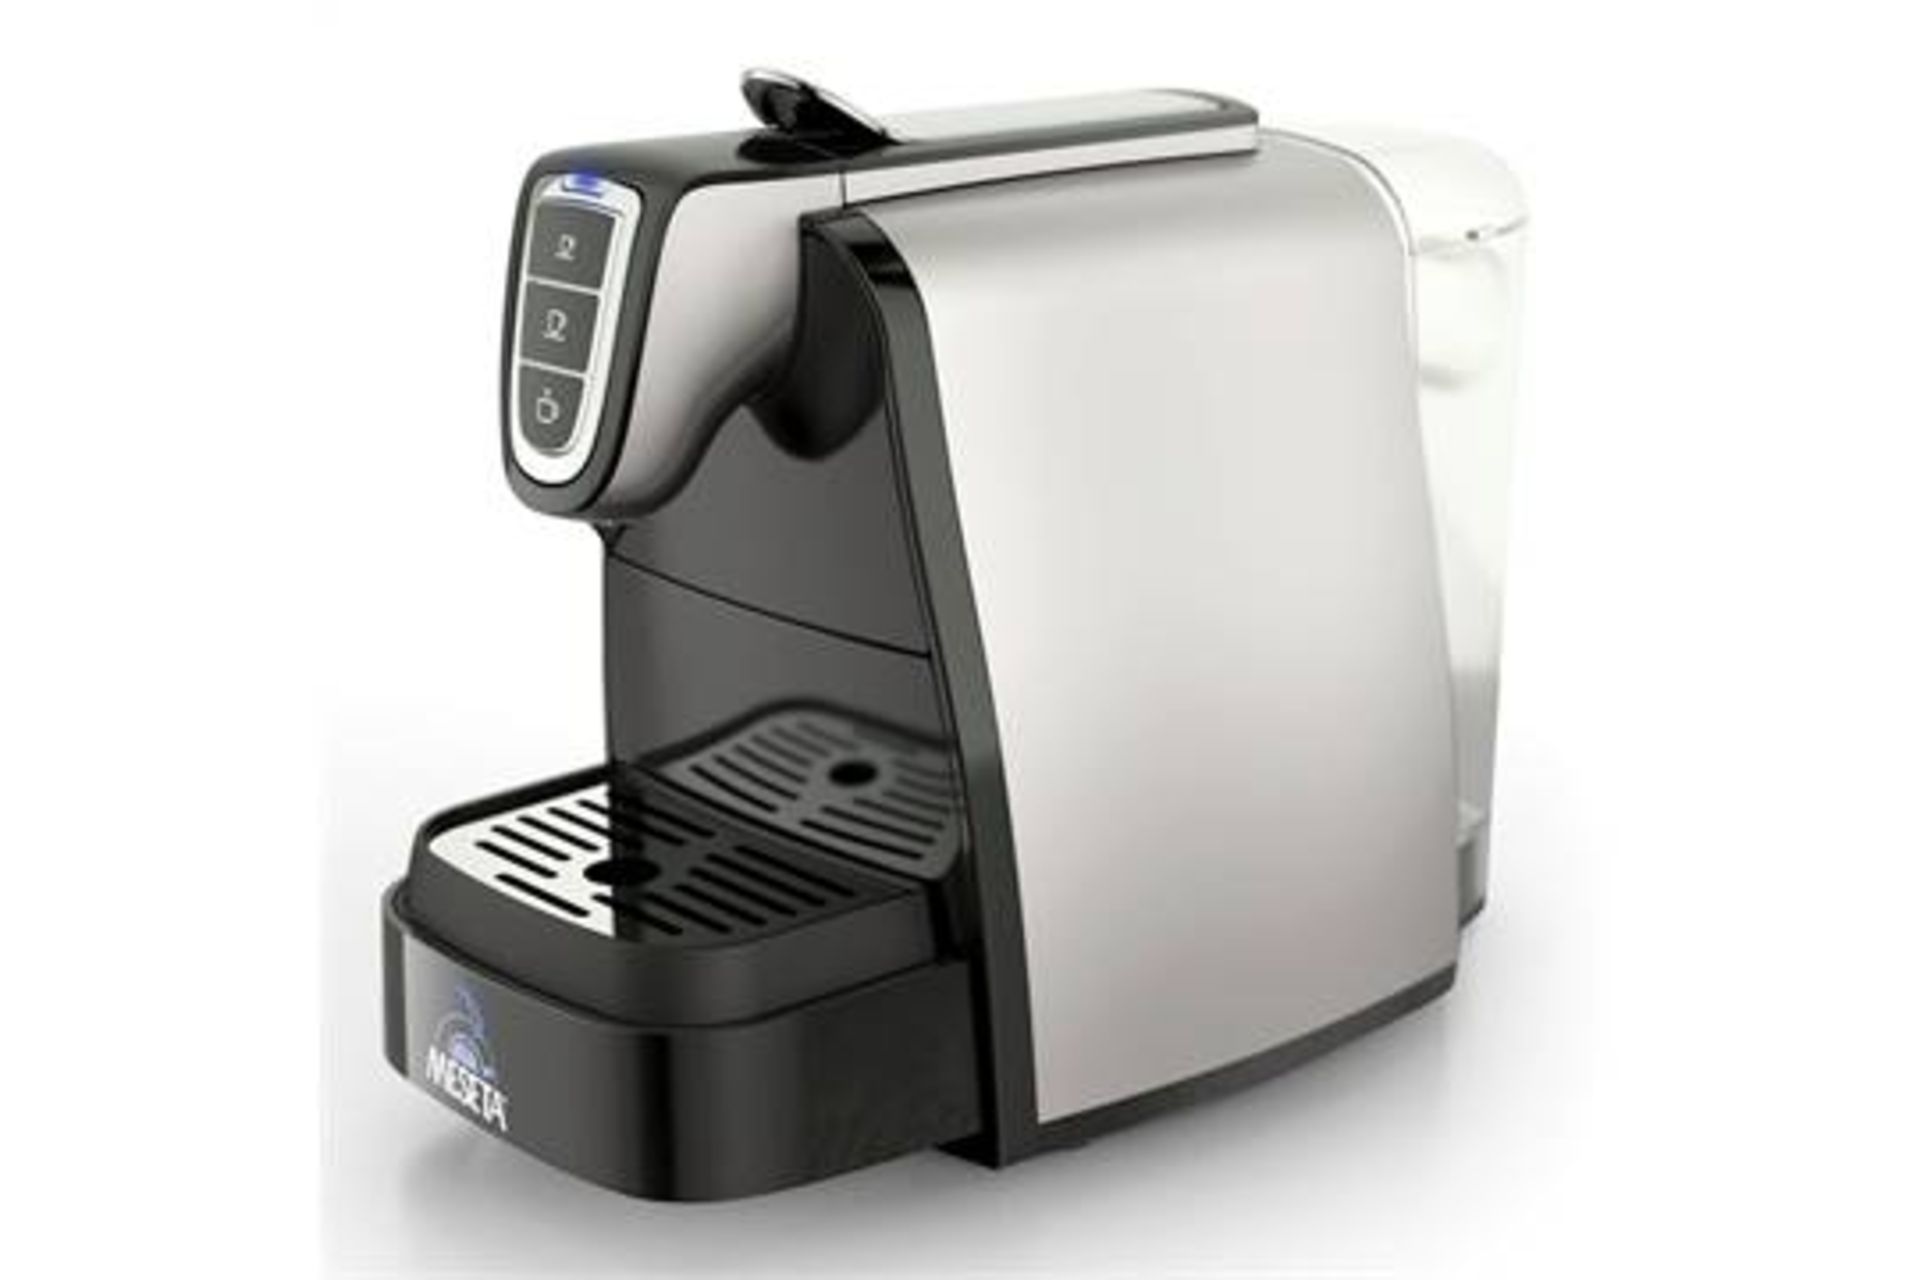 * 2 x New & Boxed Meseta Capsule Coffee Machine (part cancelled order); Italian Design; Built in